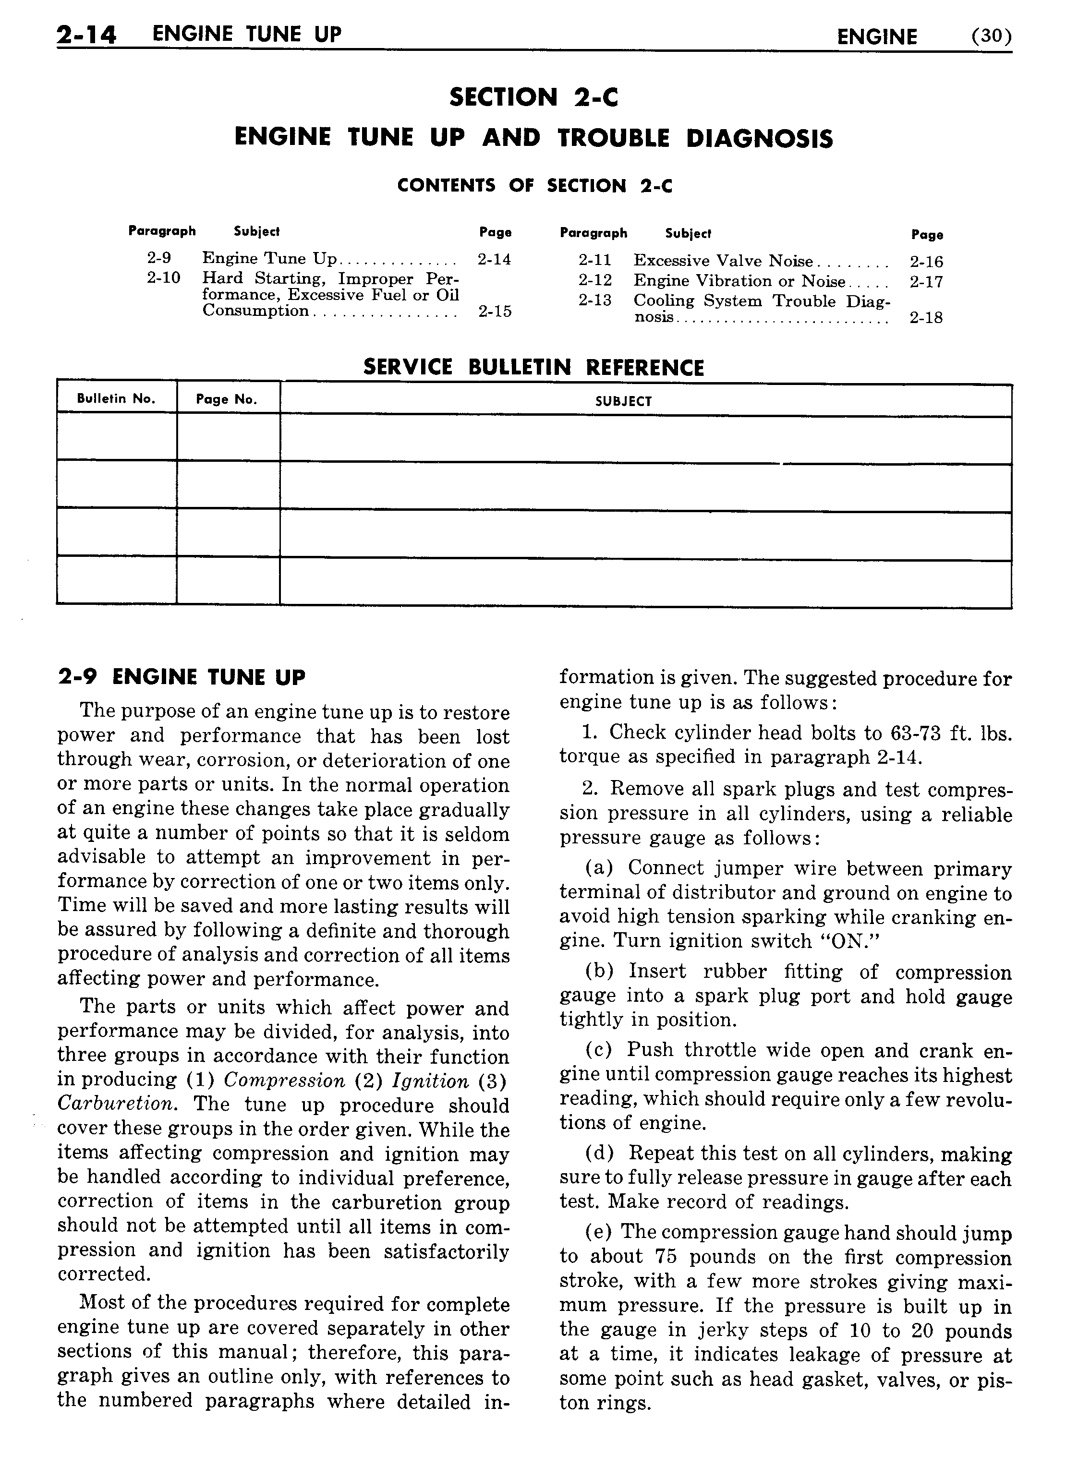 n_03 1954 Buick Shop Manual - Engine-014-014.jpg